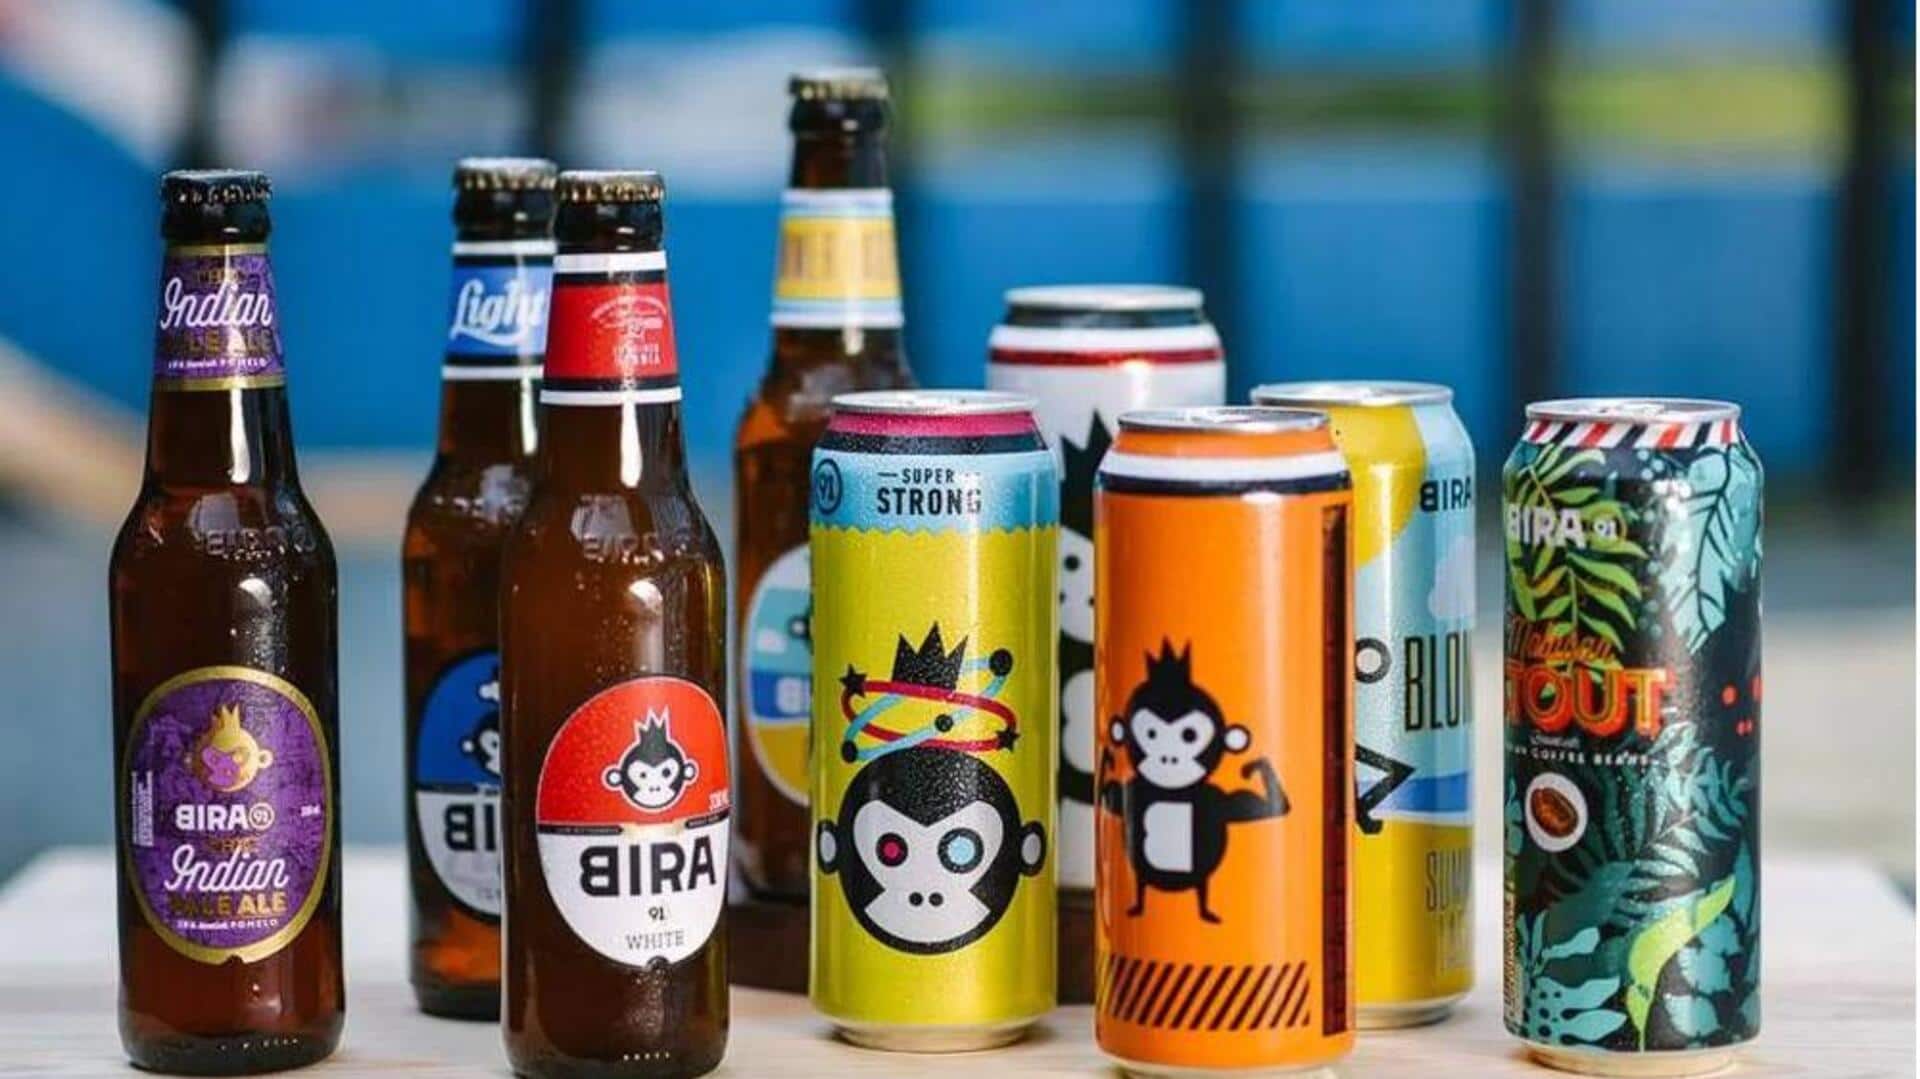 Japan's Kirin invests $25M in craft beer brand Bira 91